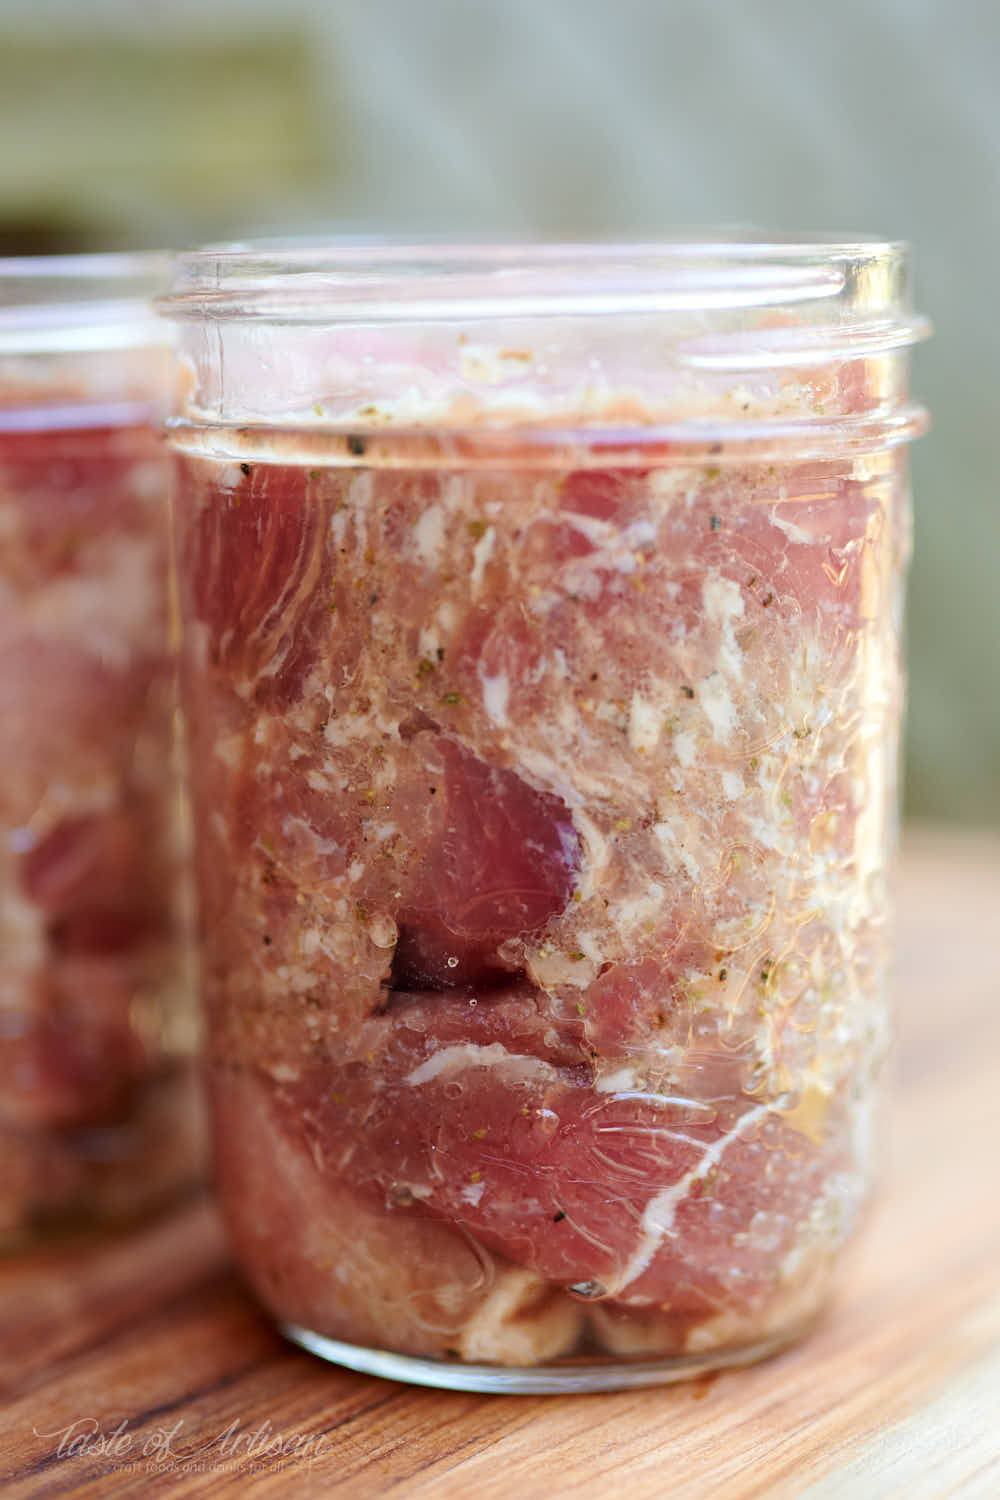 Pork stuffed in a glass jar.